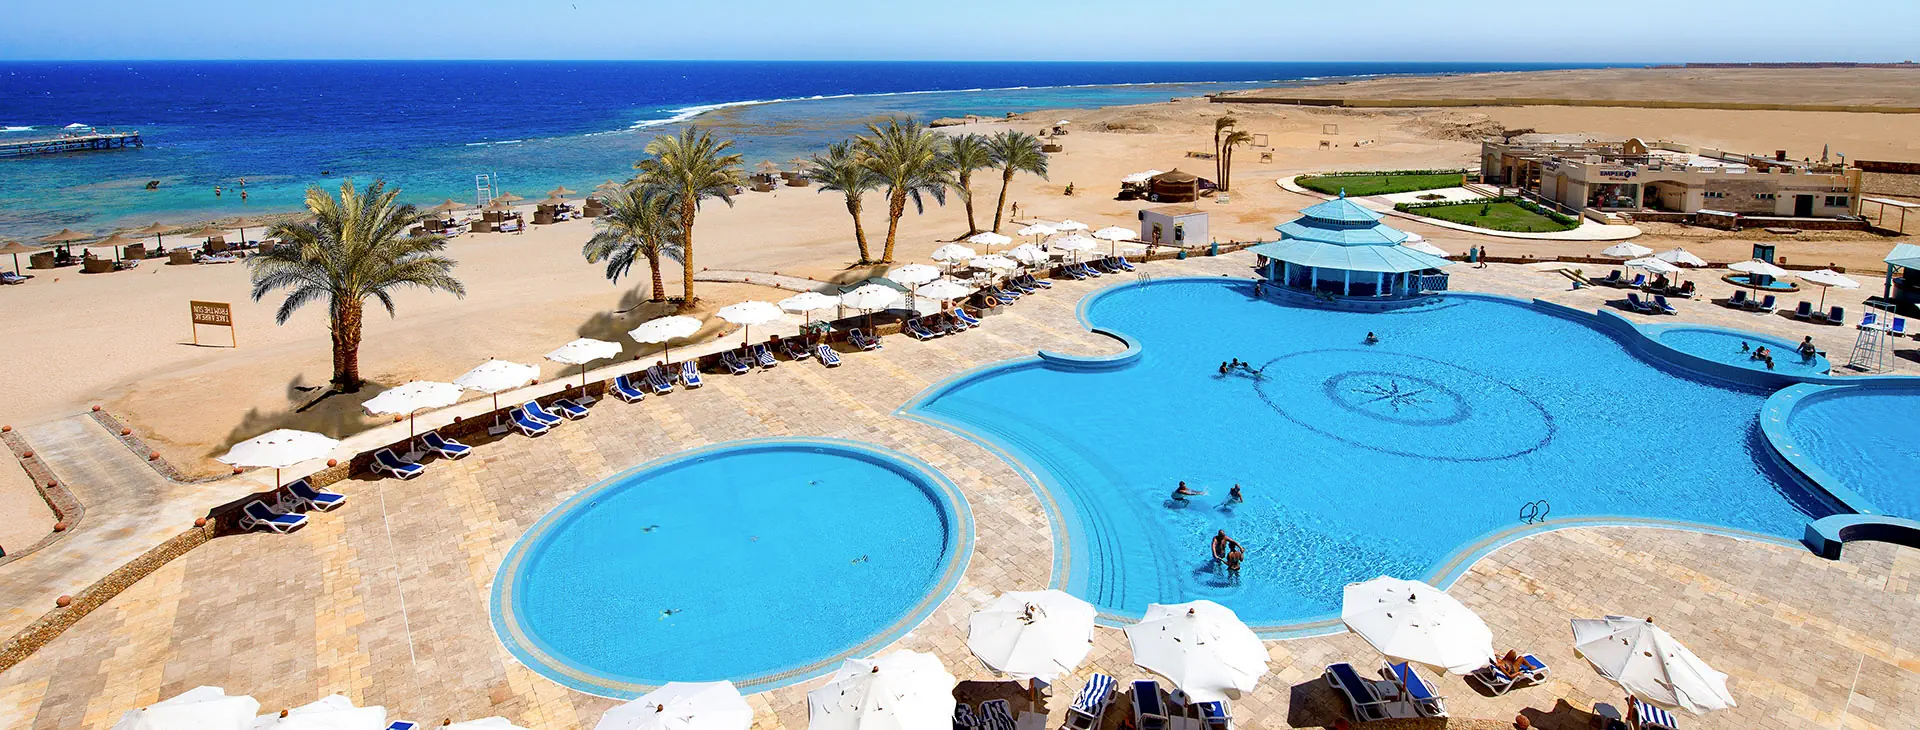 Egipt Marsa Alam Marsa Alam Concorde Moreen Beach Resort & Spa Marsa Alam